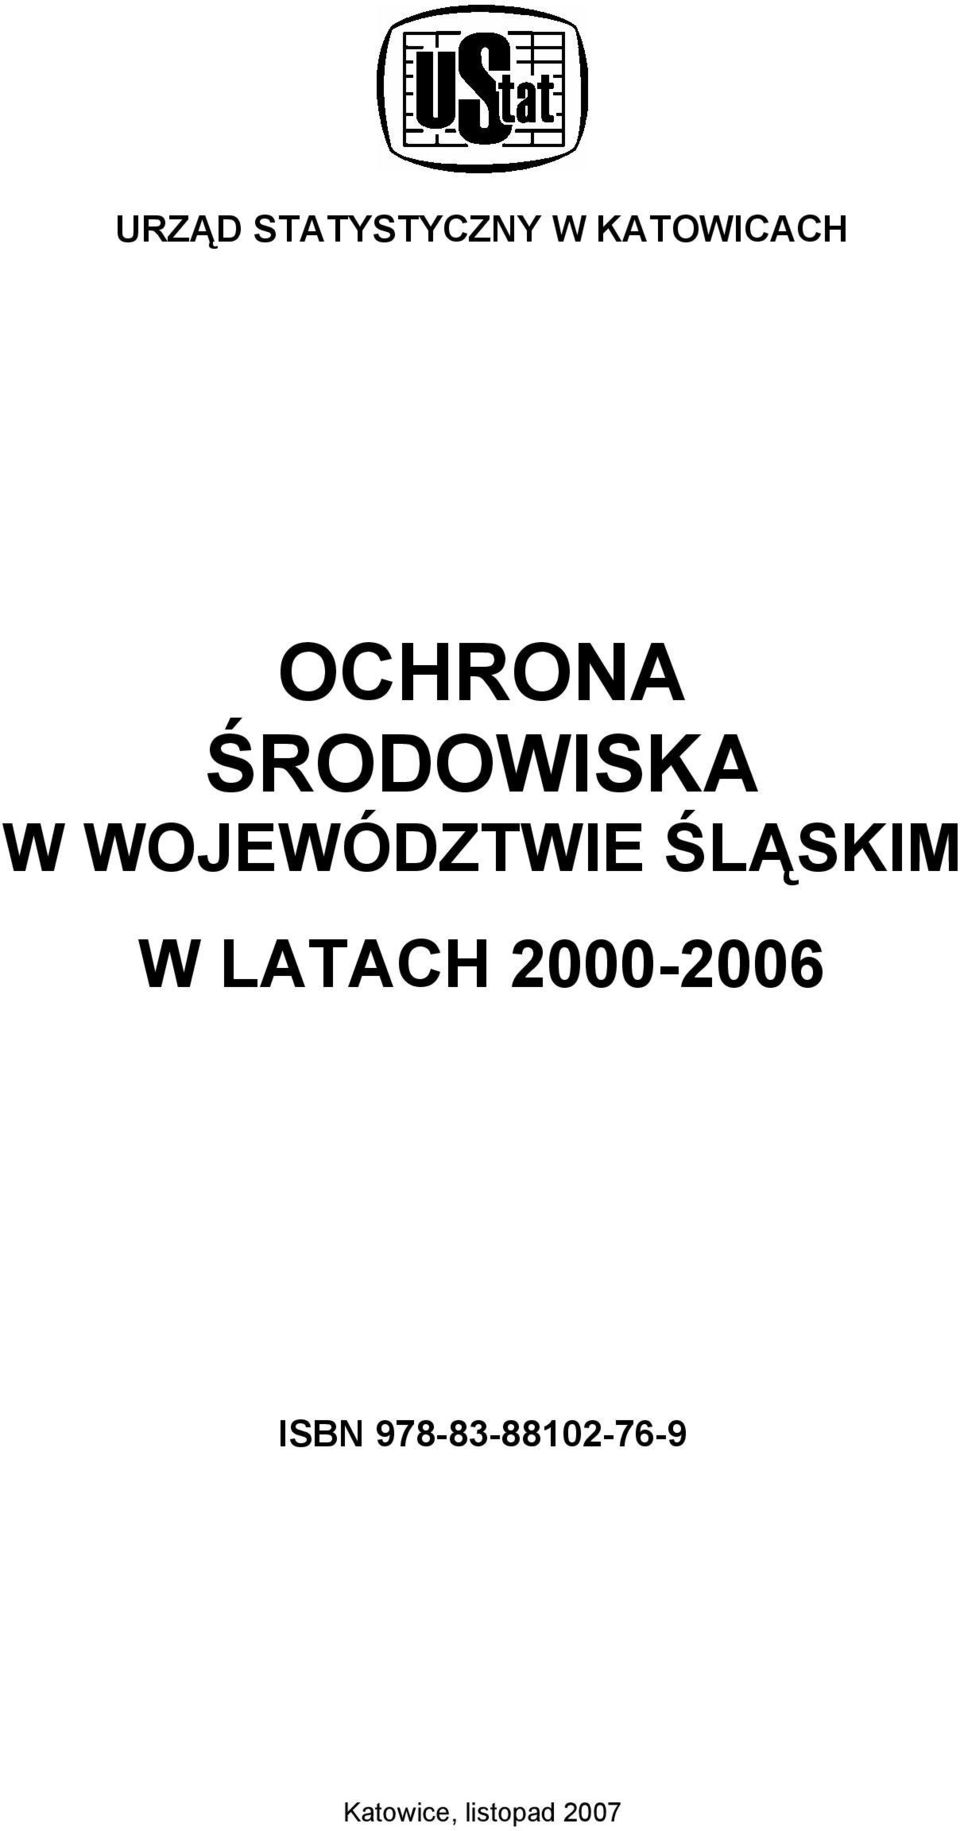 ŚLĄSKIM W LATACH 2000-2006 ISBN